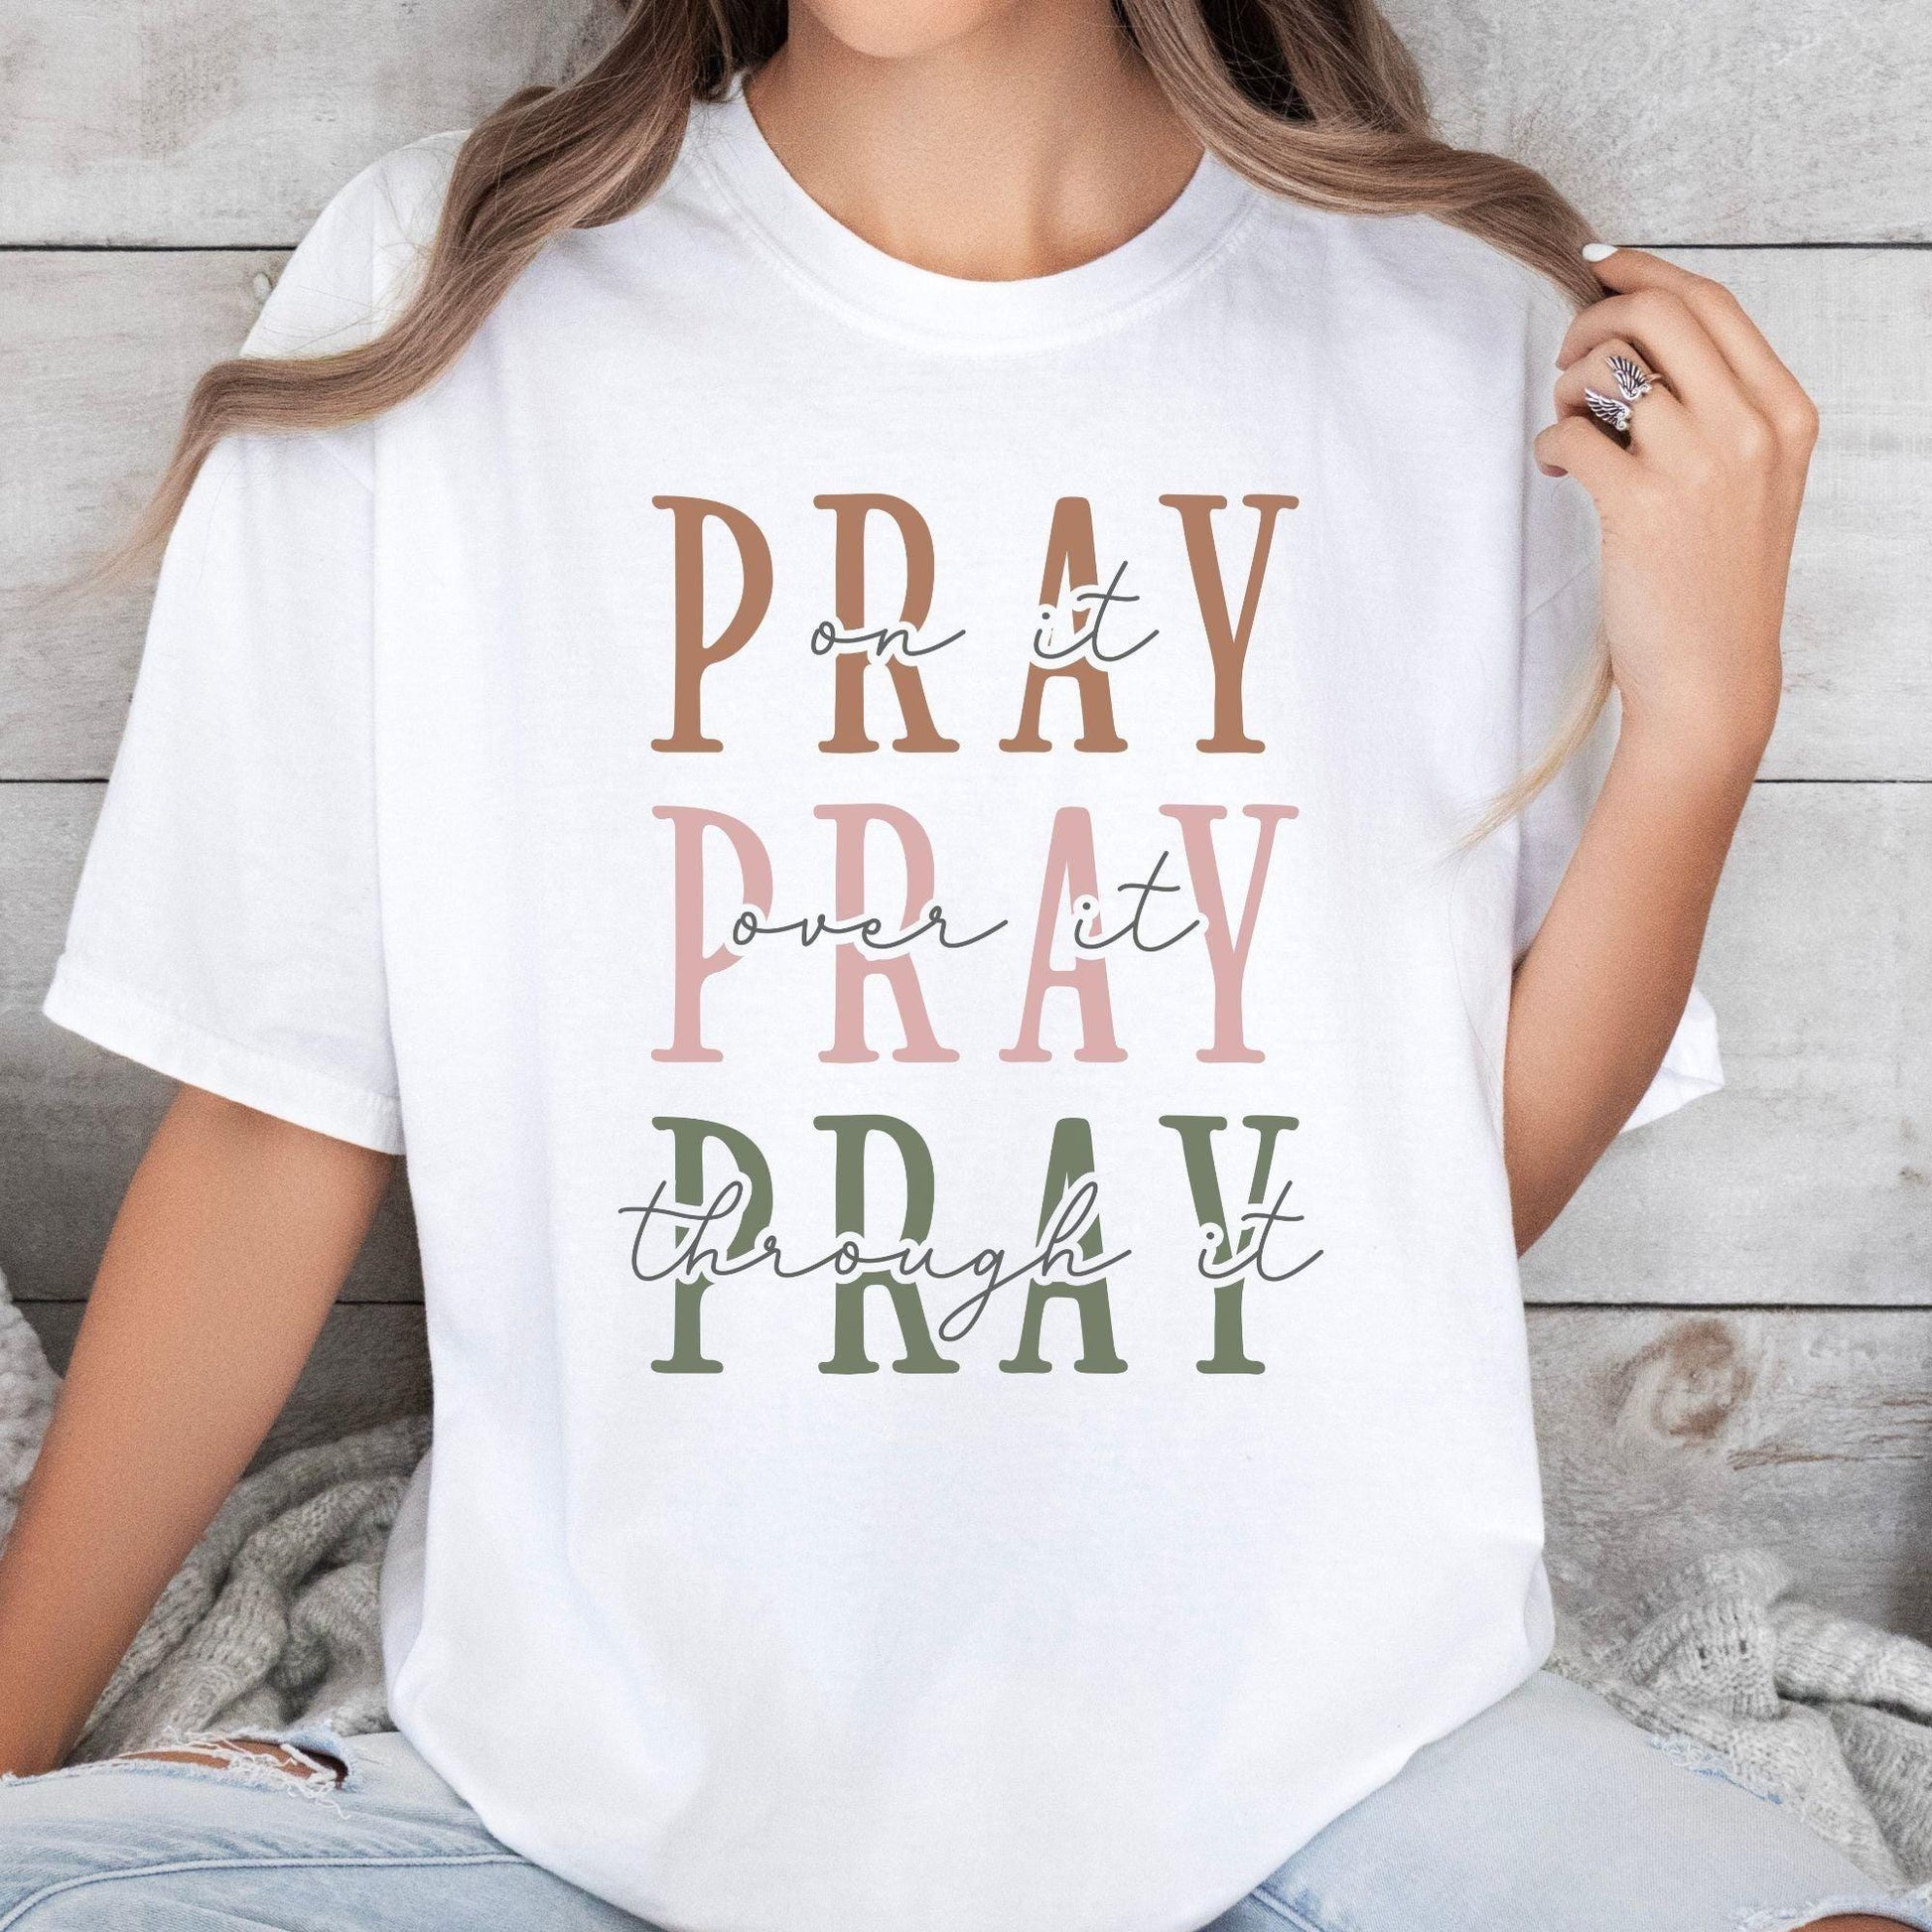 Pray On It Pray Over It Shirt - Jesus Shirt - GiftHaus